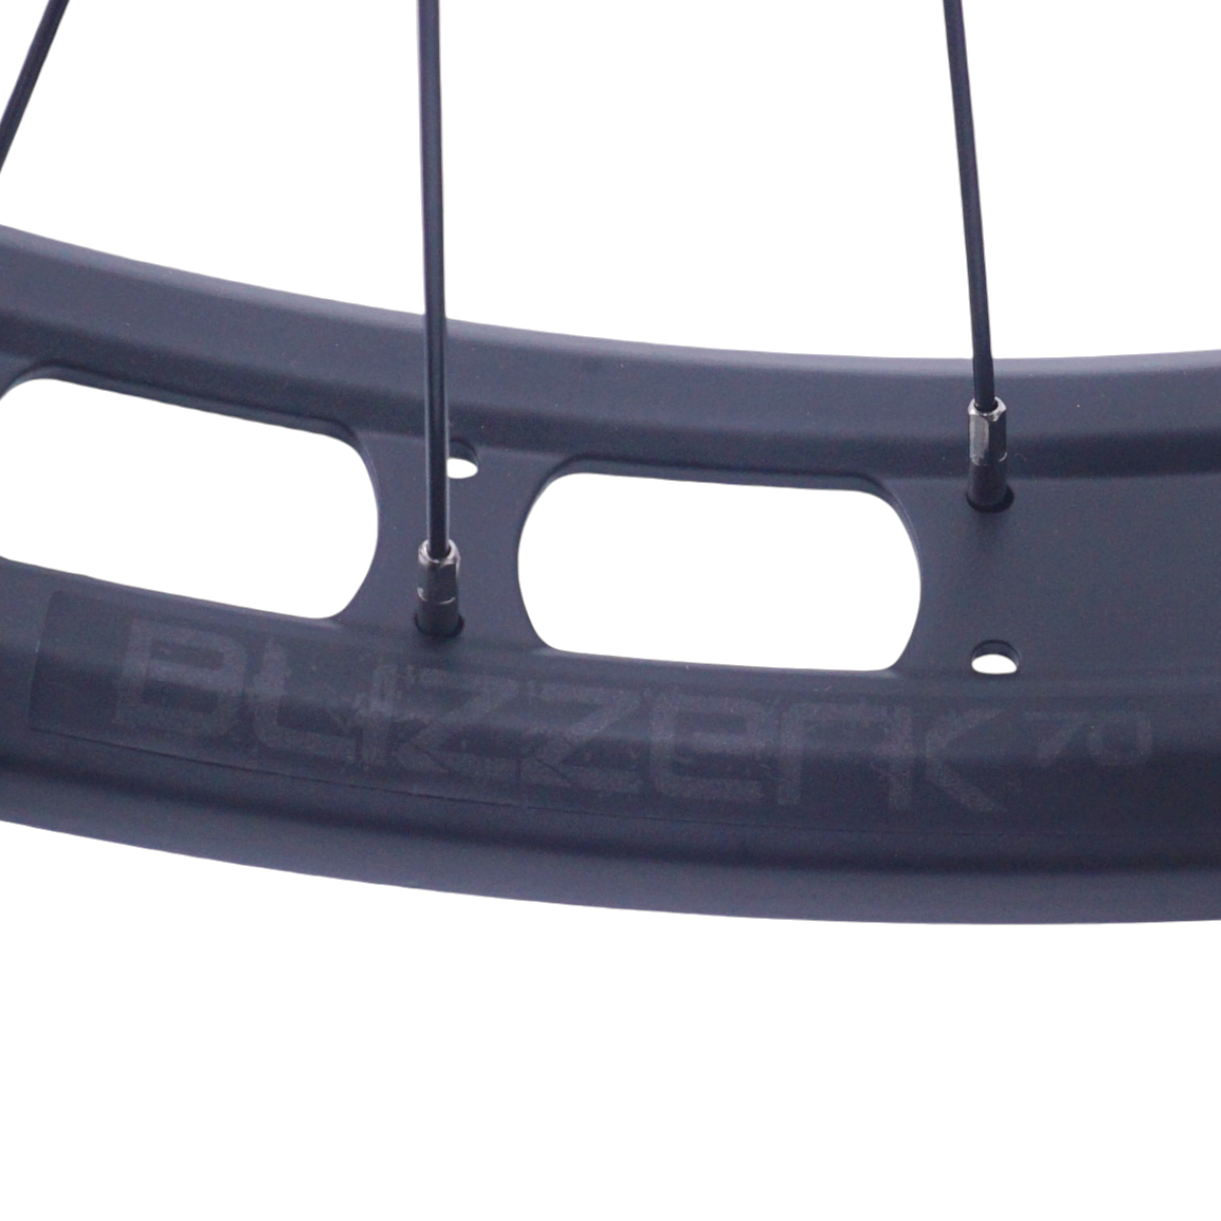 Alex Blizzerk 70 REAR 190mm QR Formula Tubeless Ready Fat Bike Wheel - The Bikesmiths